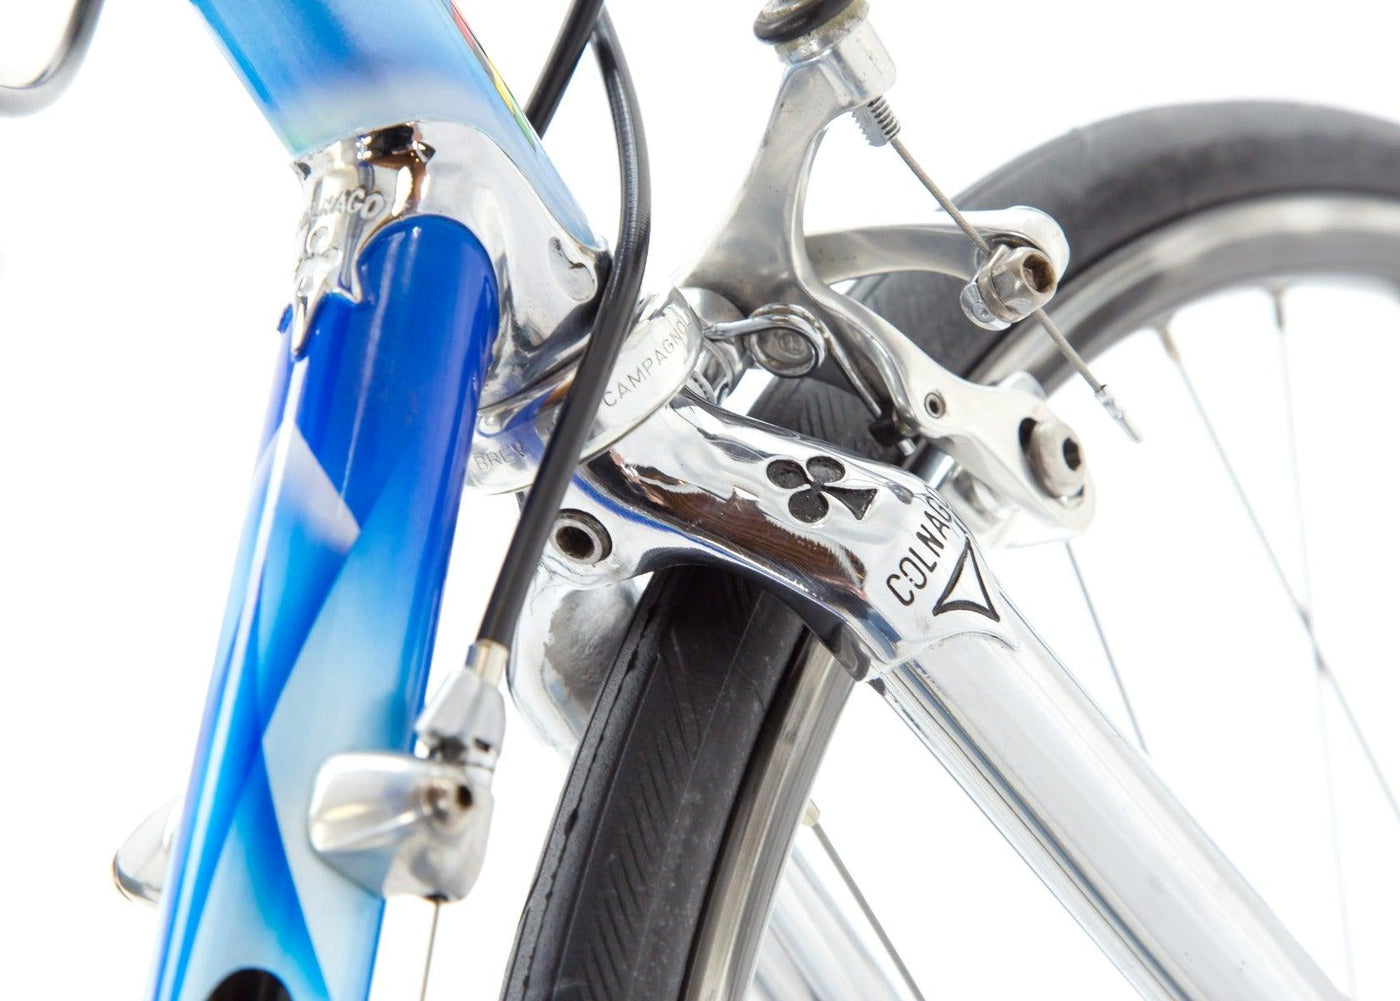 Colnago Superissimo Decor Classic Road Bicycle 1990s - Steel Vintage Bikes